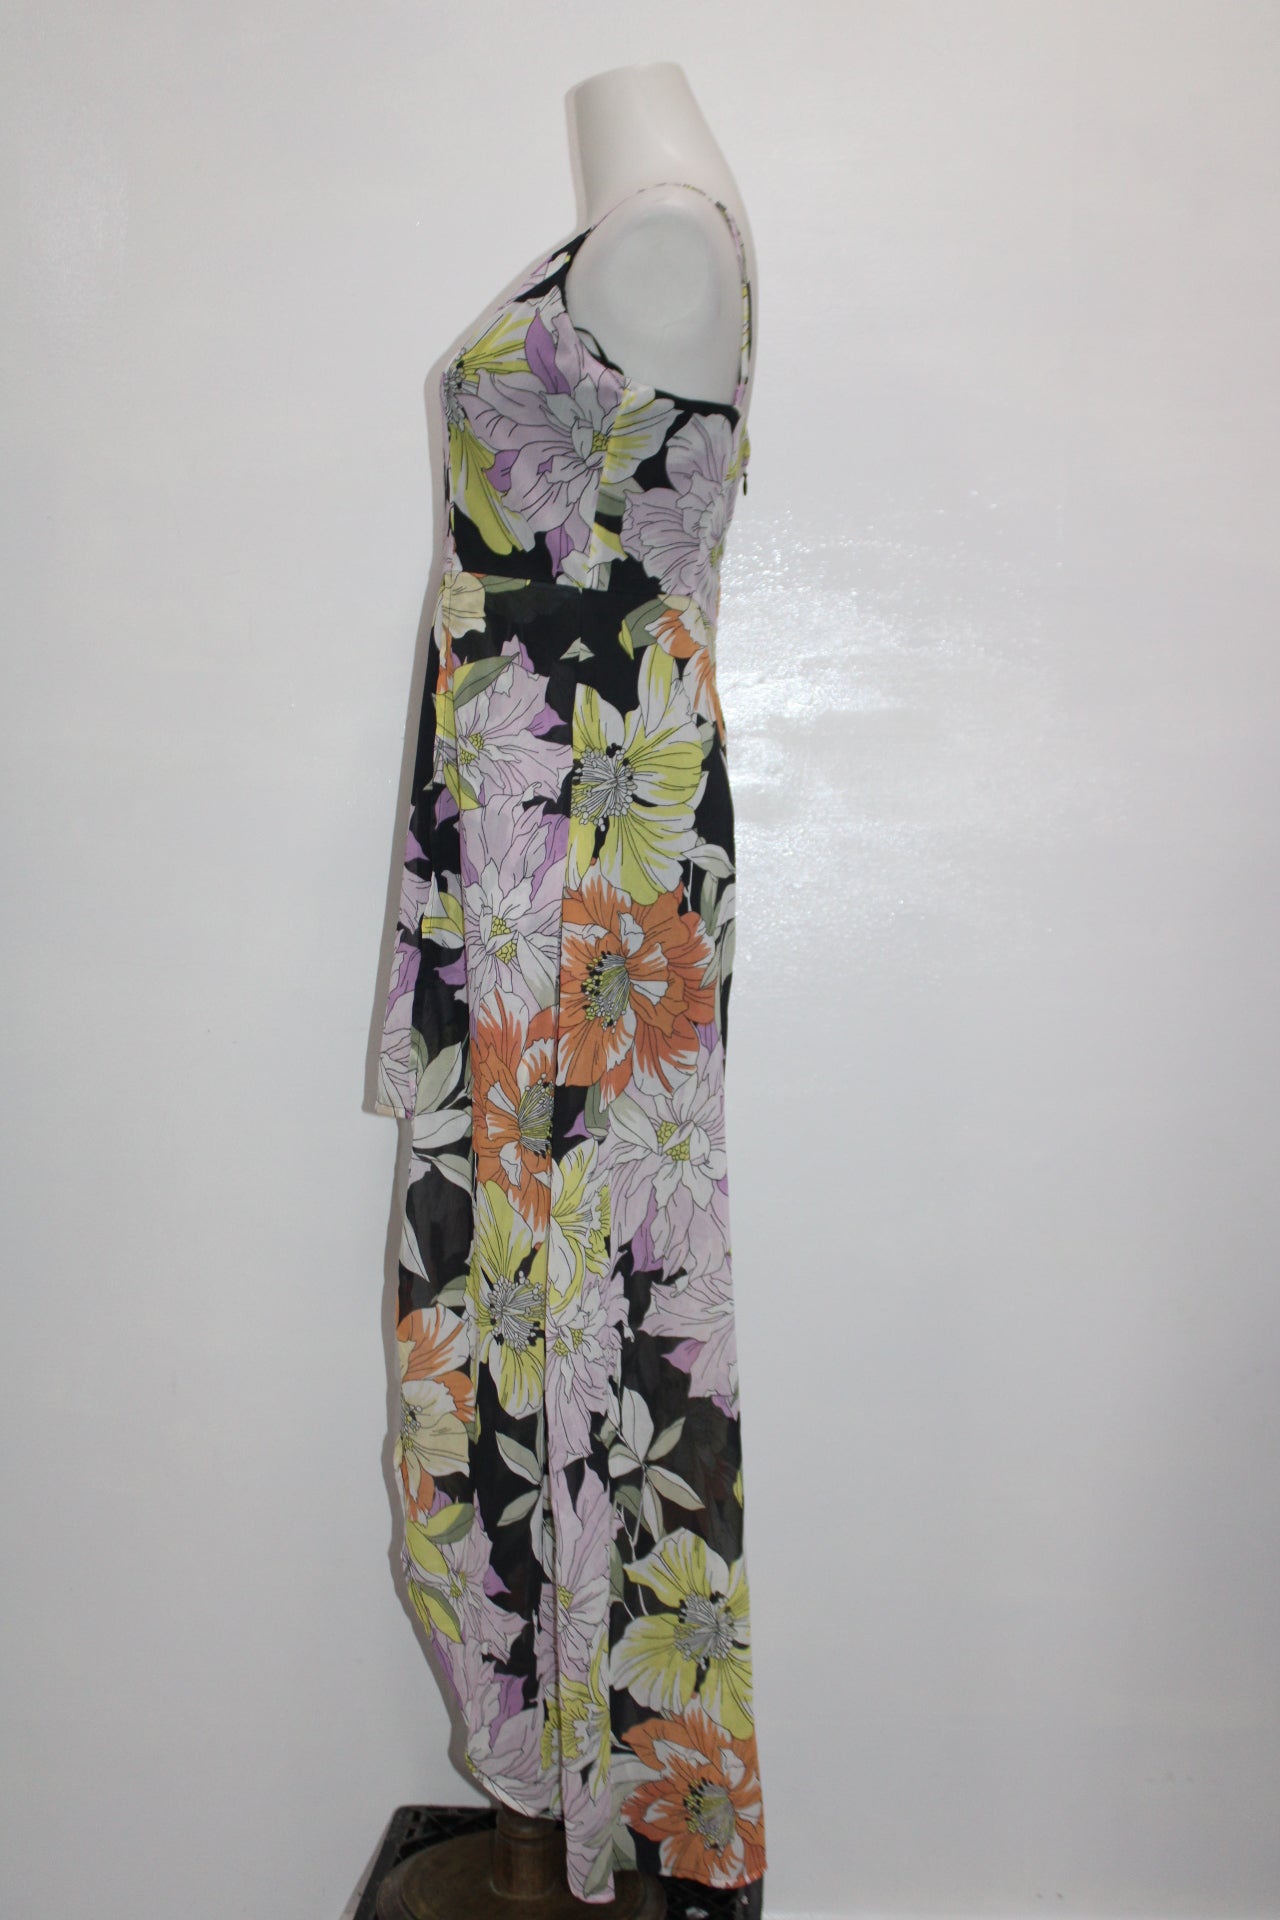 GUESS Taryn Skirt-Back Floral-Print Sumatra Flora Print Jumpsuit Black S